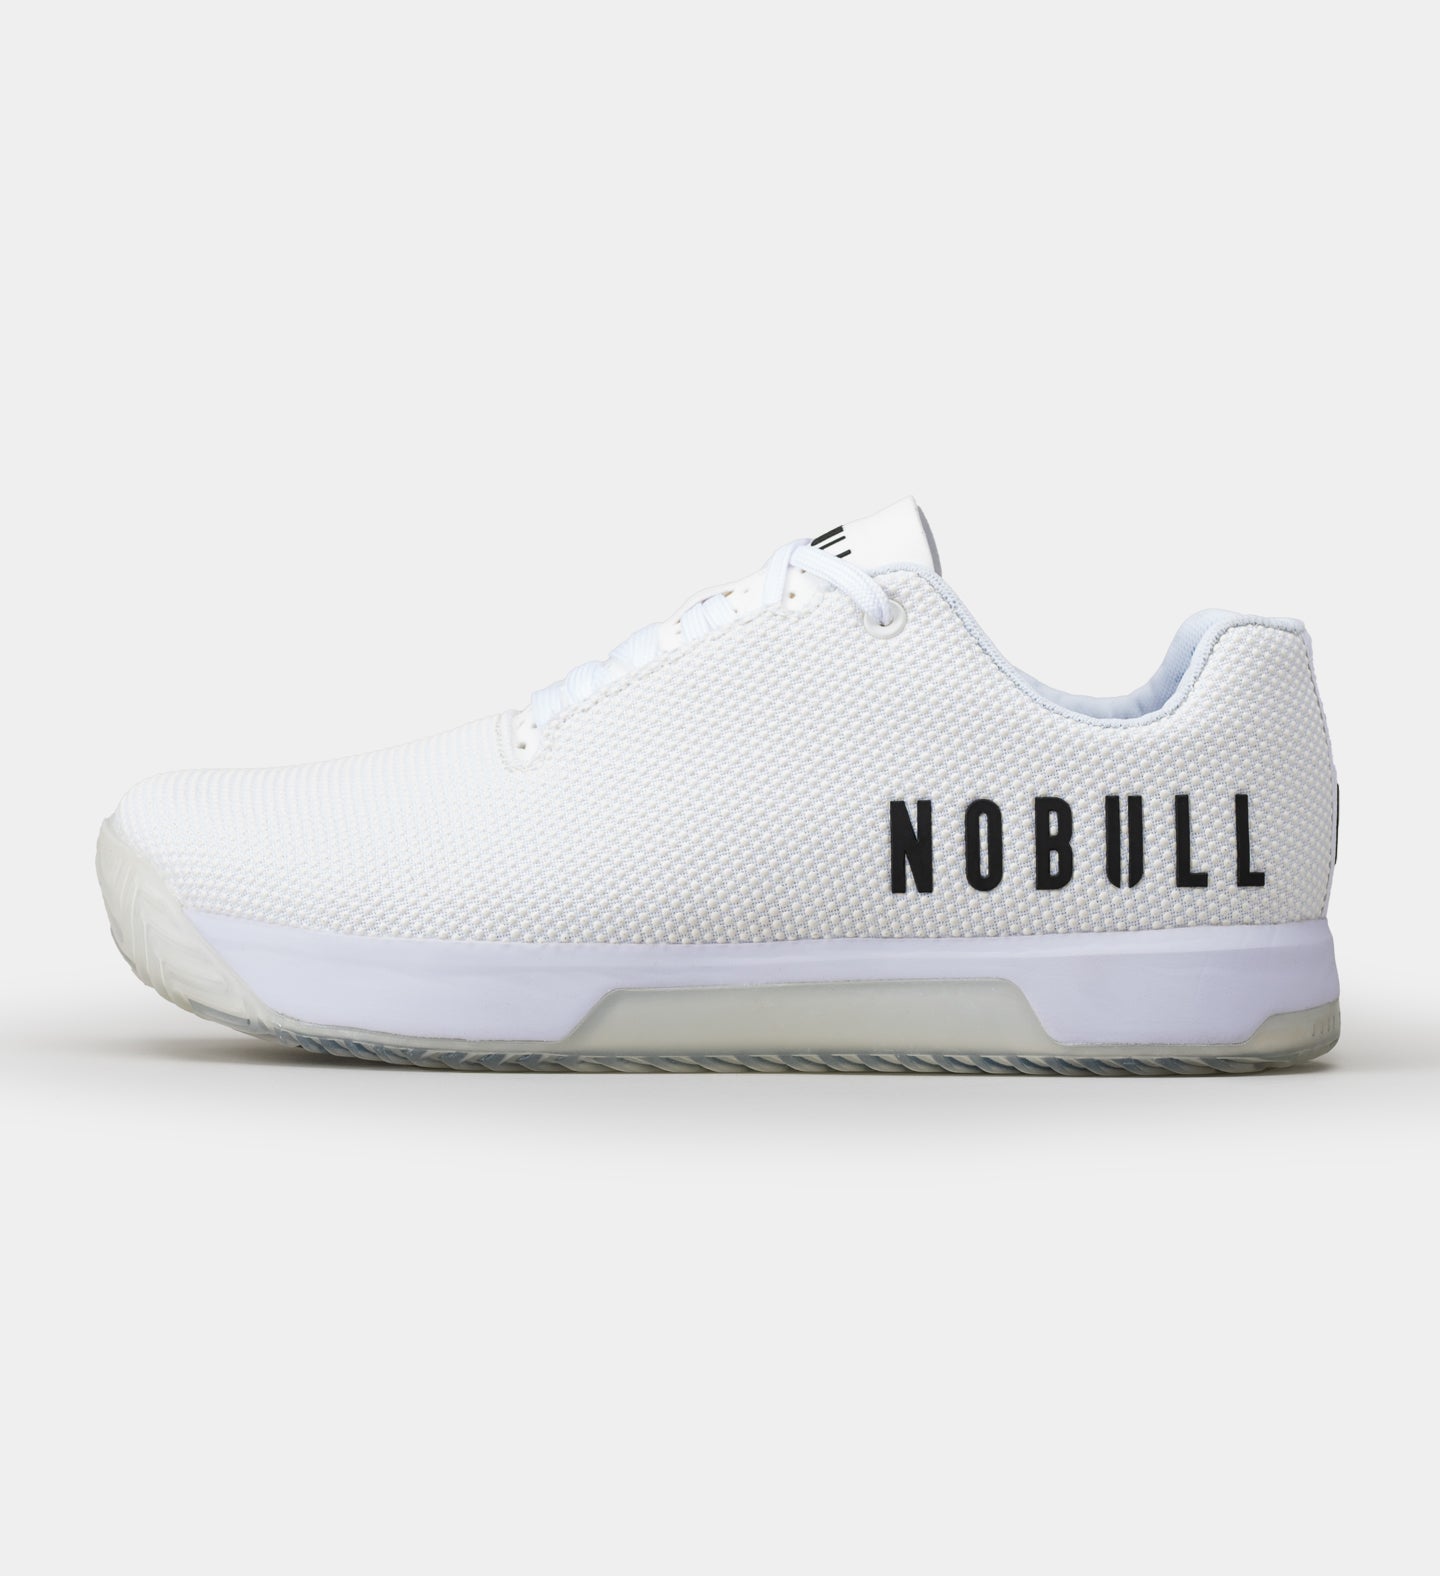  Nobull